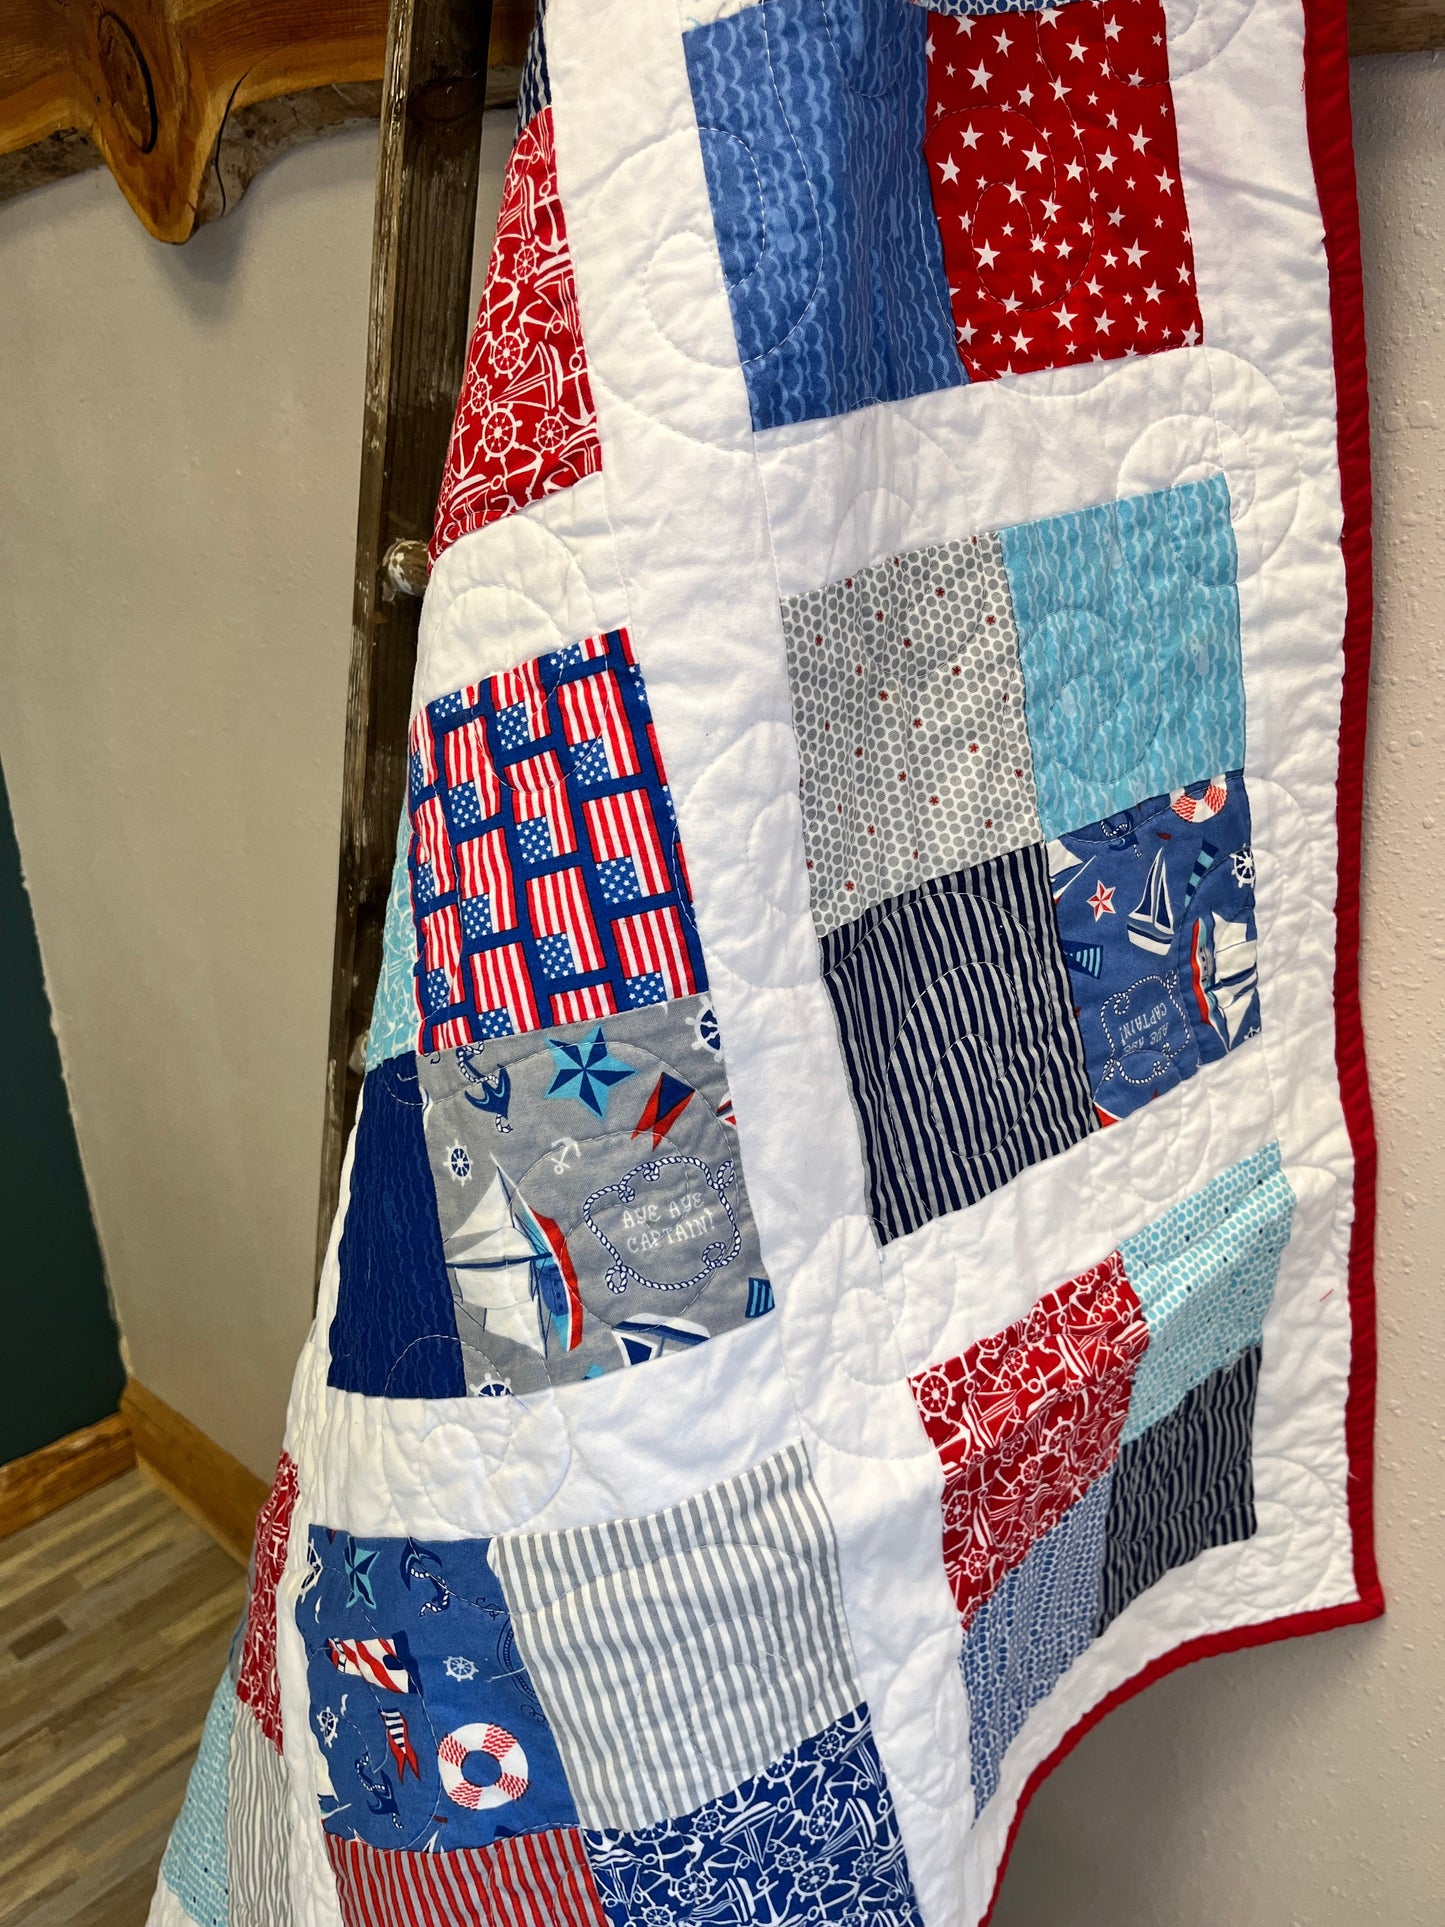 Nautical Boy's Square Patchwork Handmade Baby Quilt - The QuilTea Corner